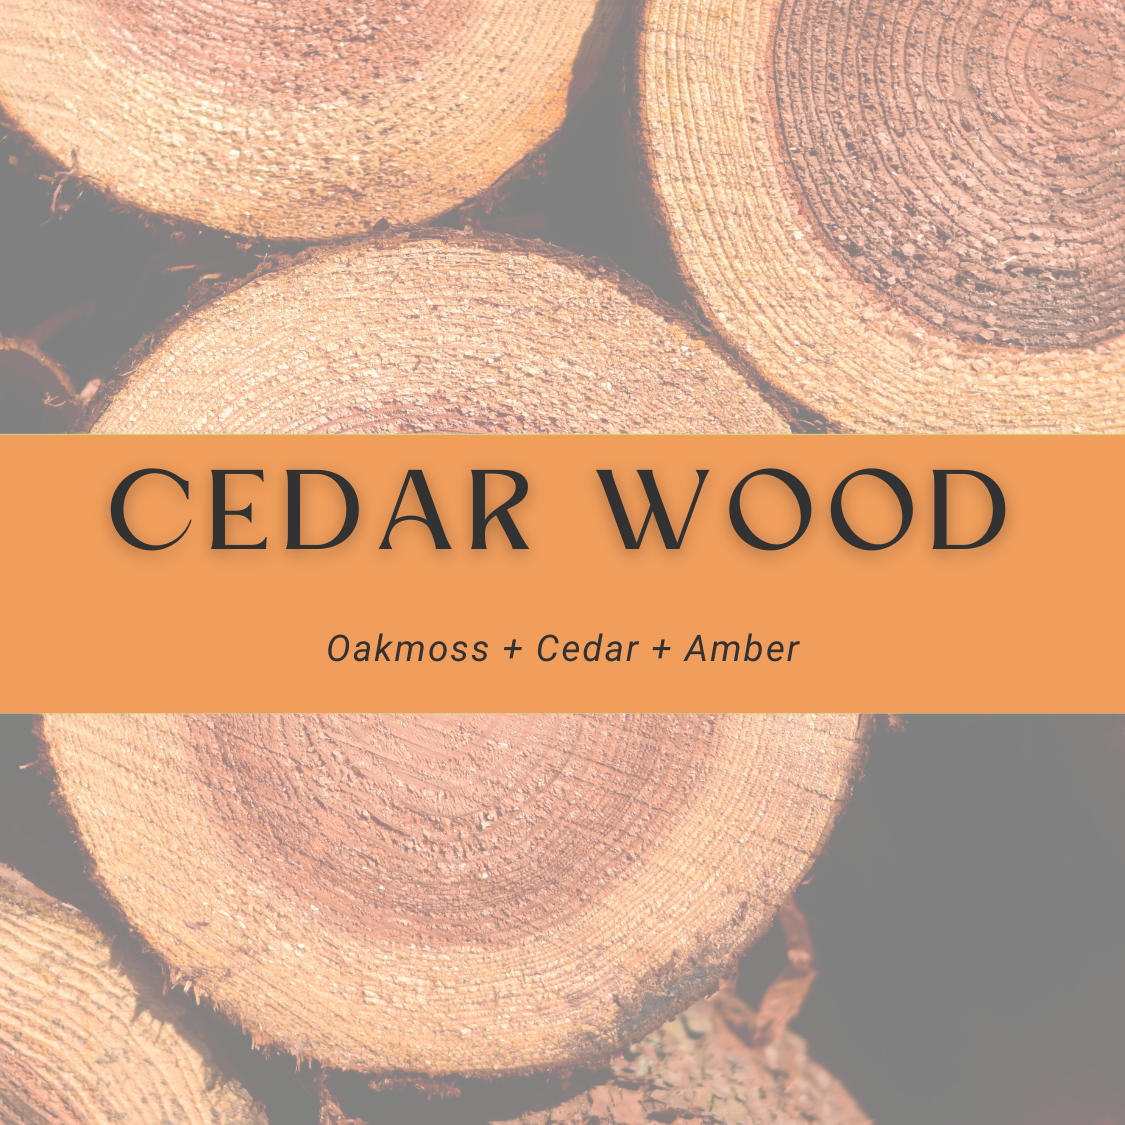 Cedar Wood Car Diffuser Oil + Refill Set